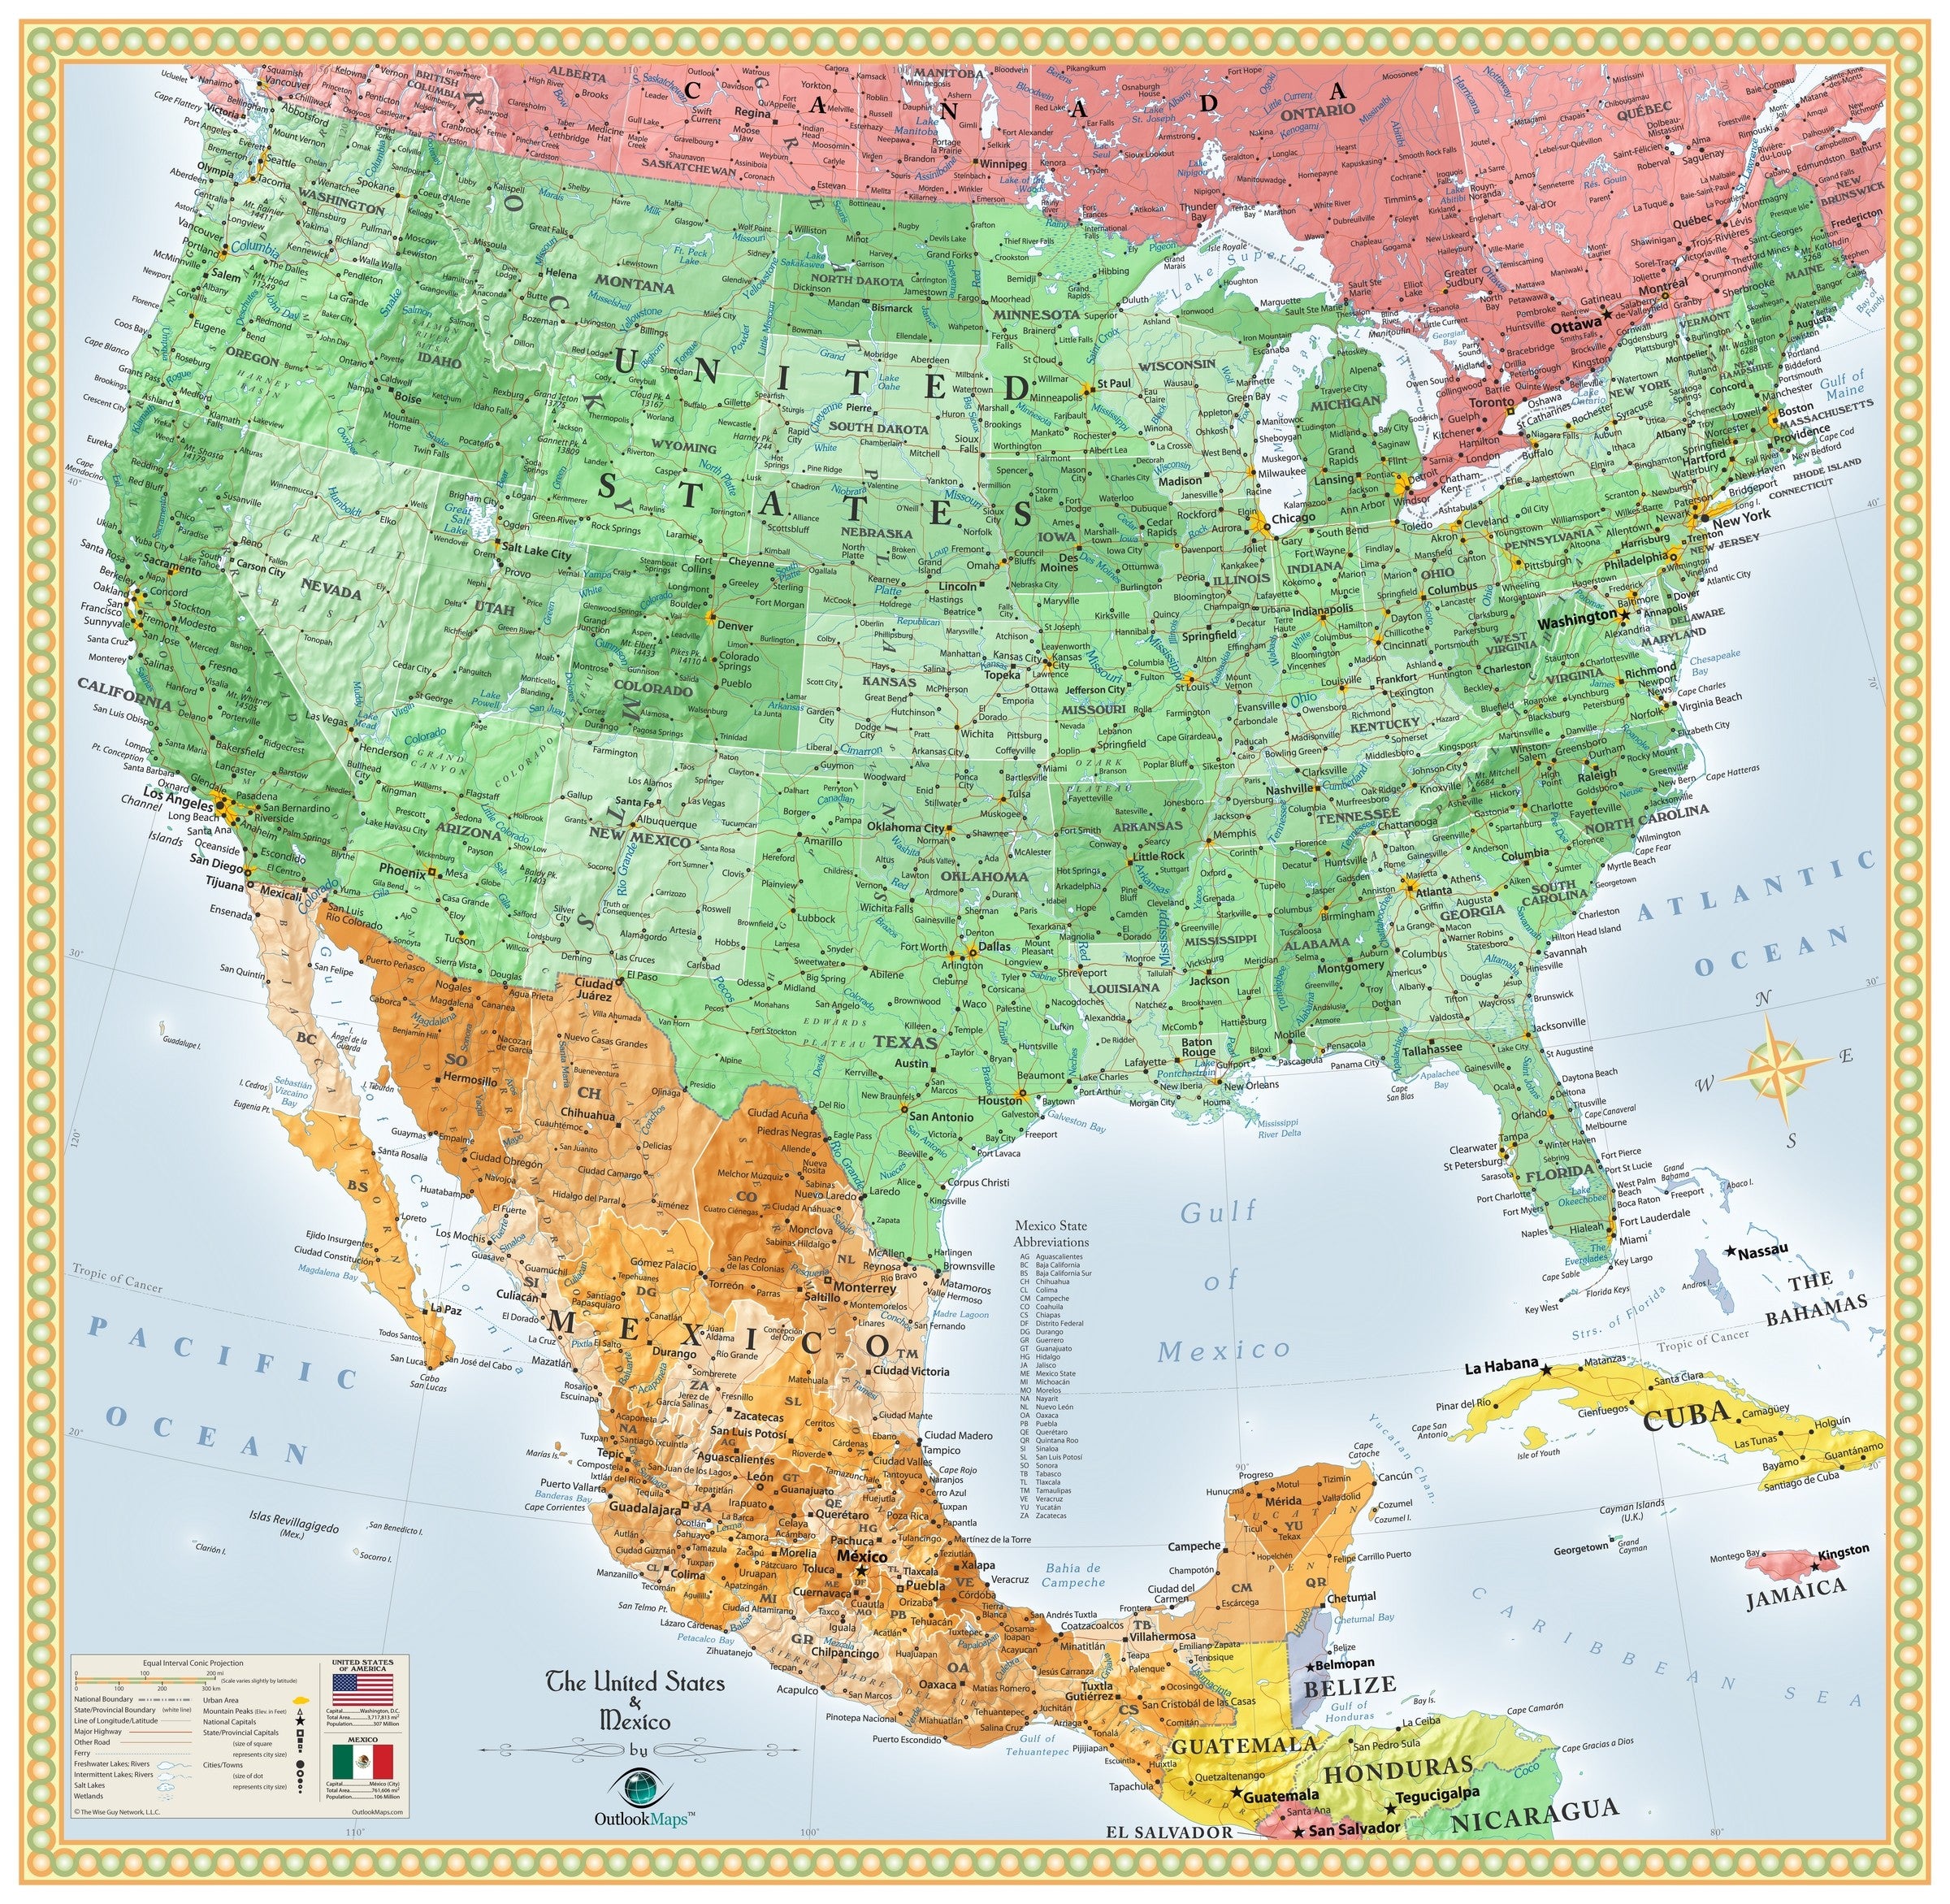 usa and mexico map image Usa And Mexico Wall Map Maps Com Com usa and mexico map image